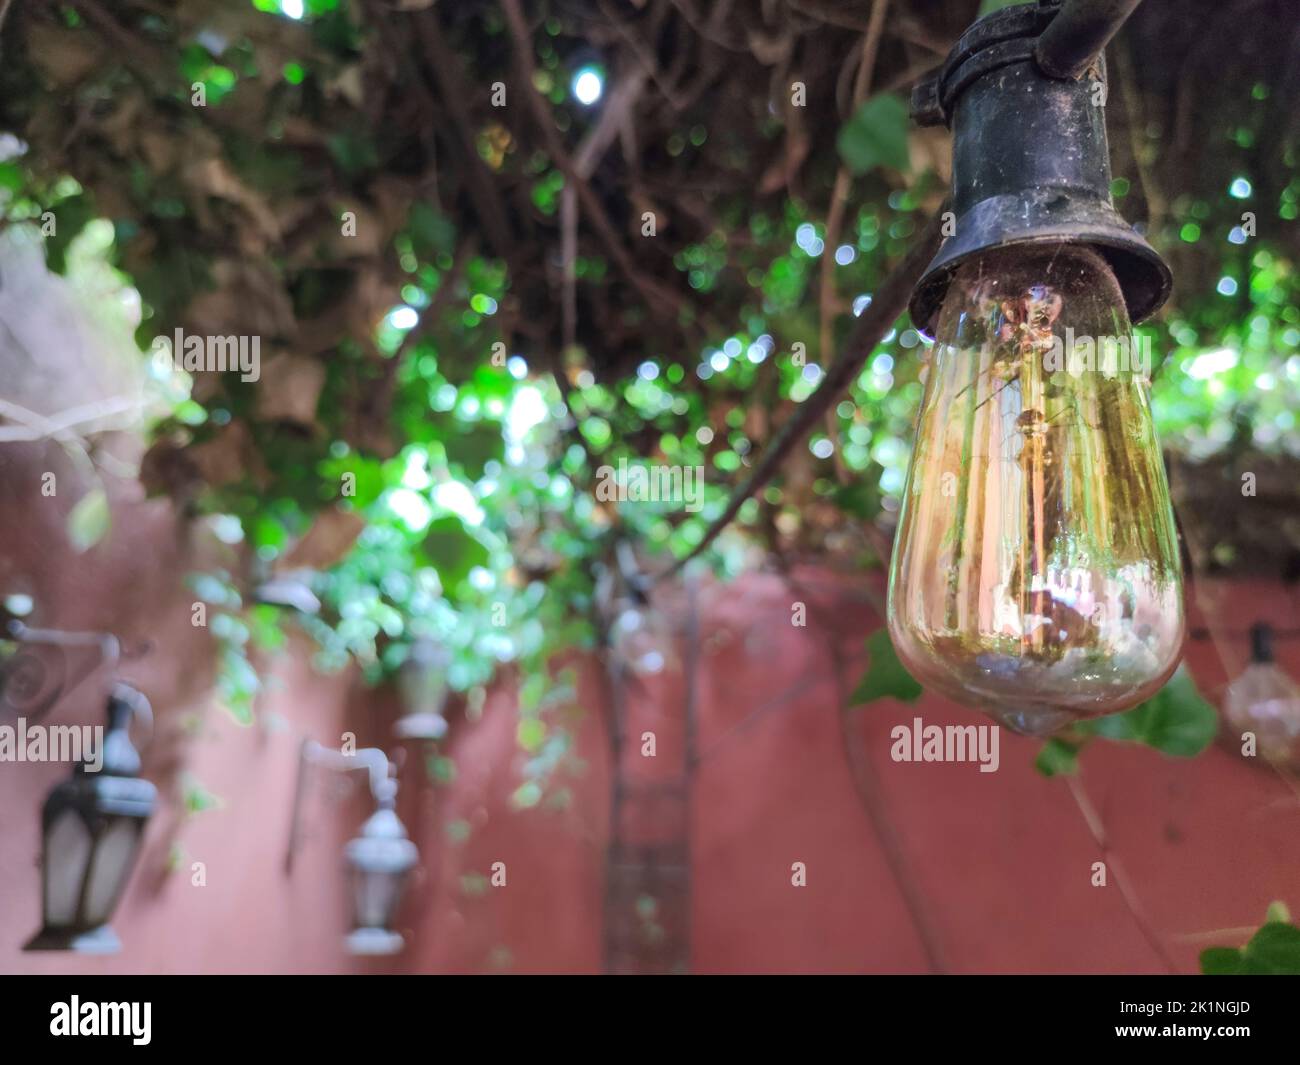 Led light retro bulb hanging from ivy vine. Arabic style bacground Stock Photo